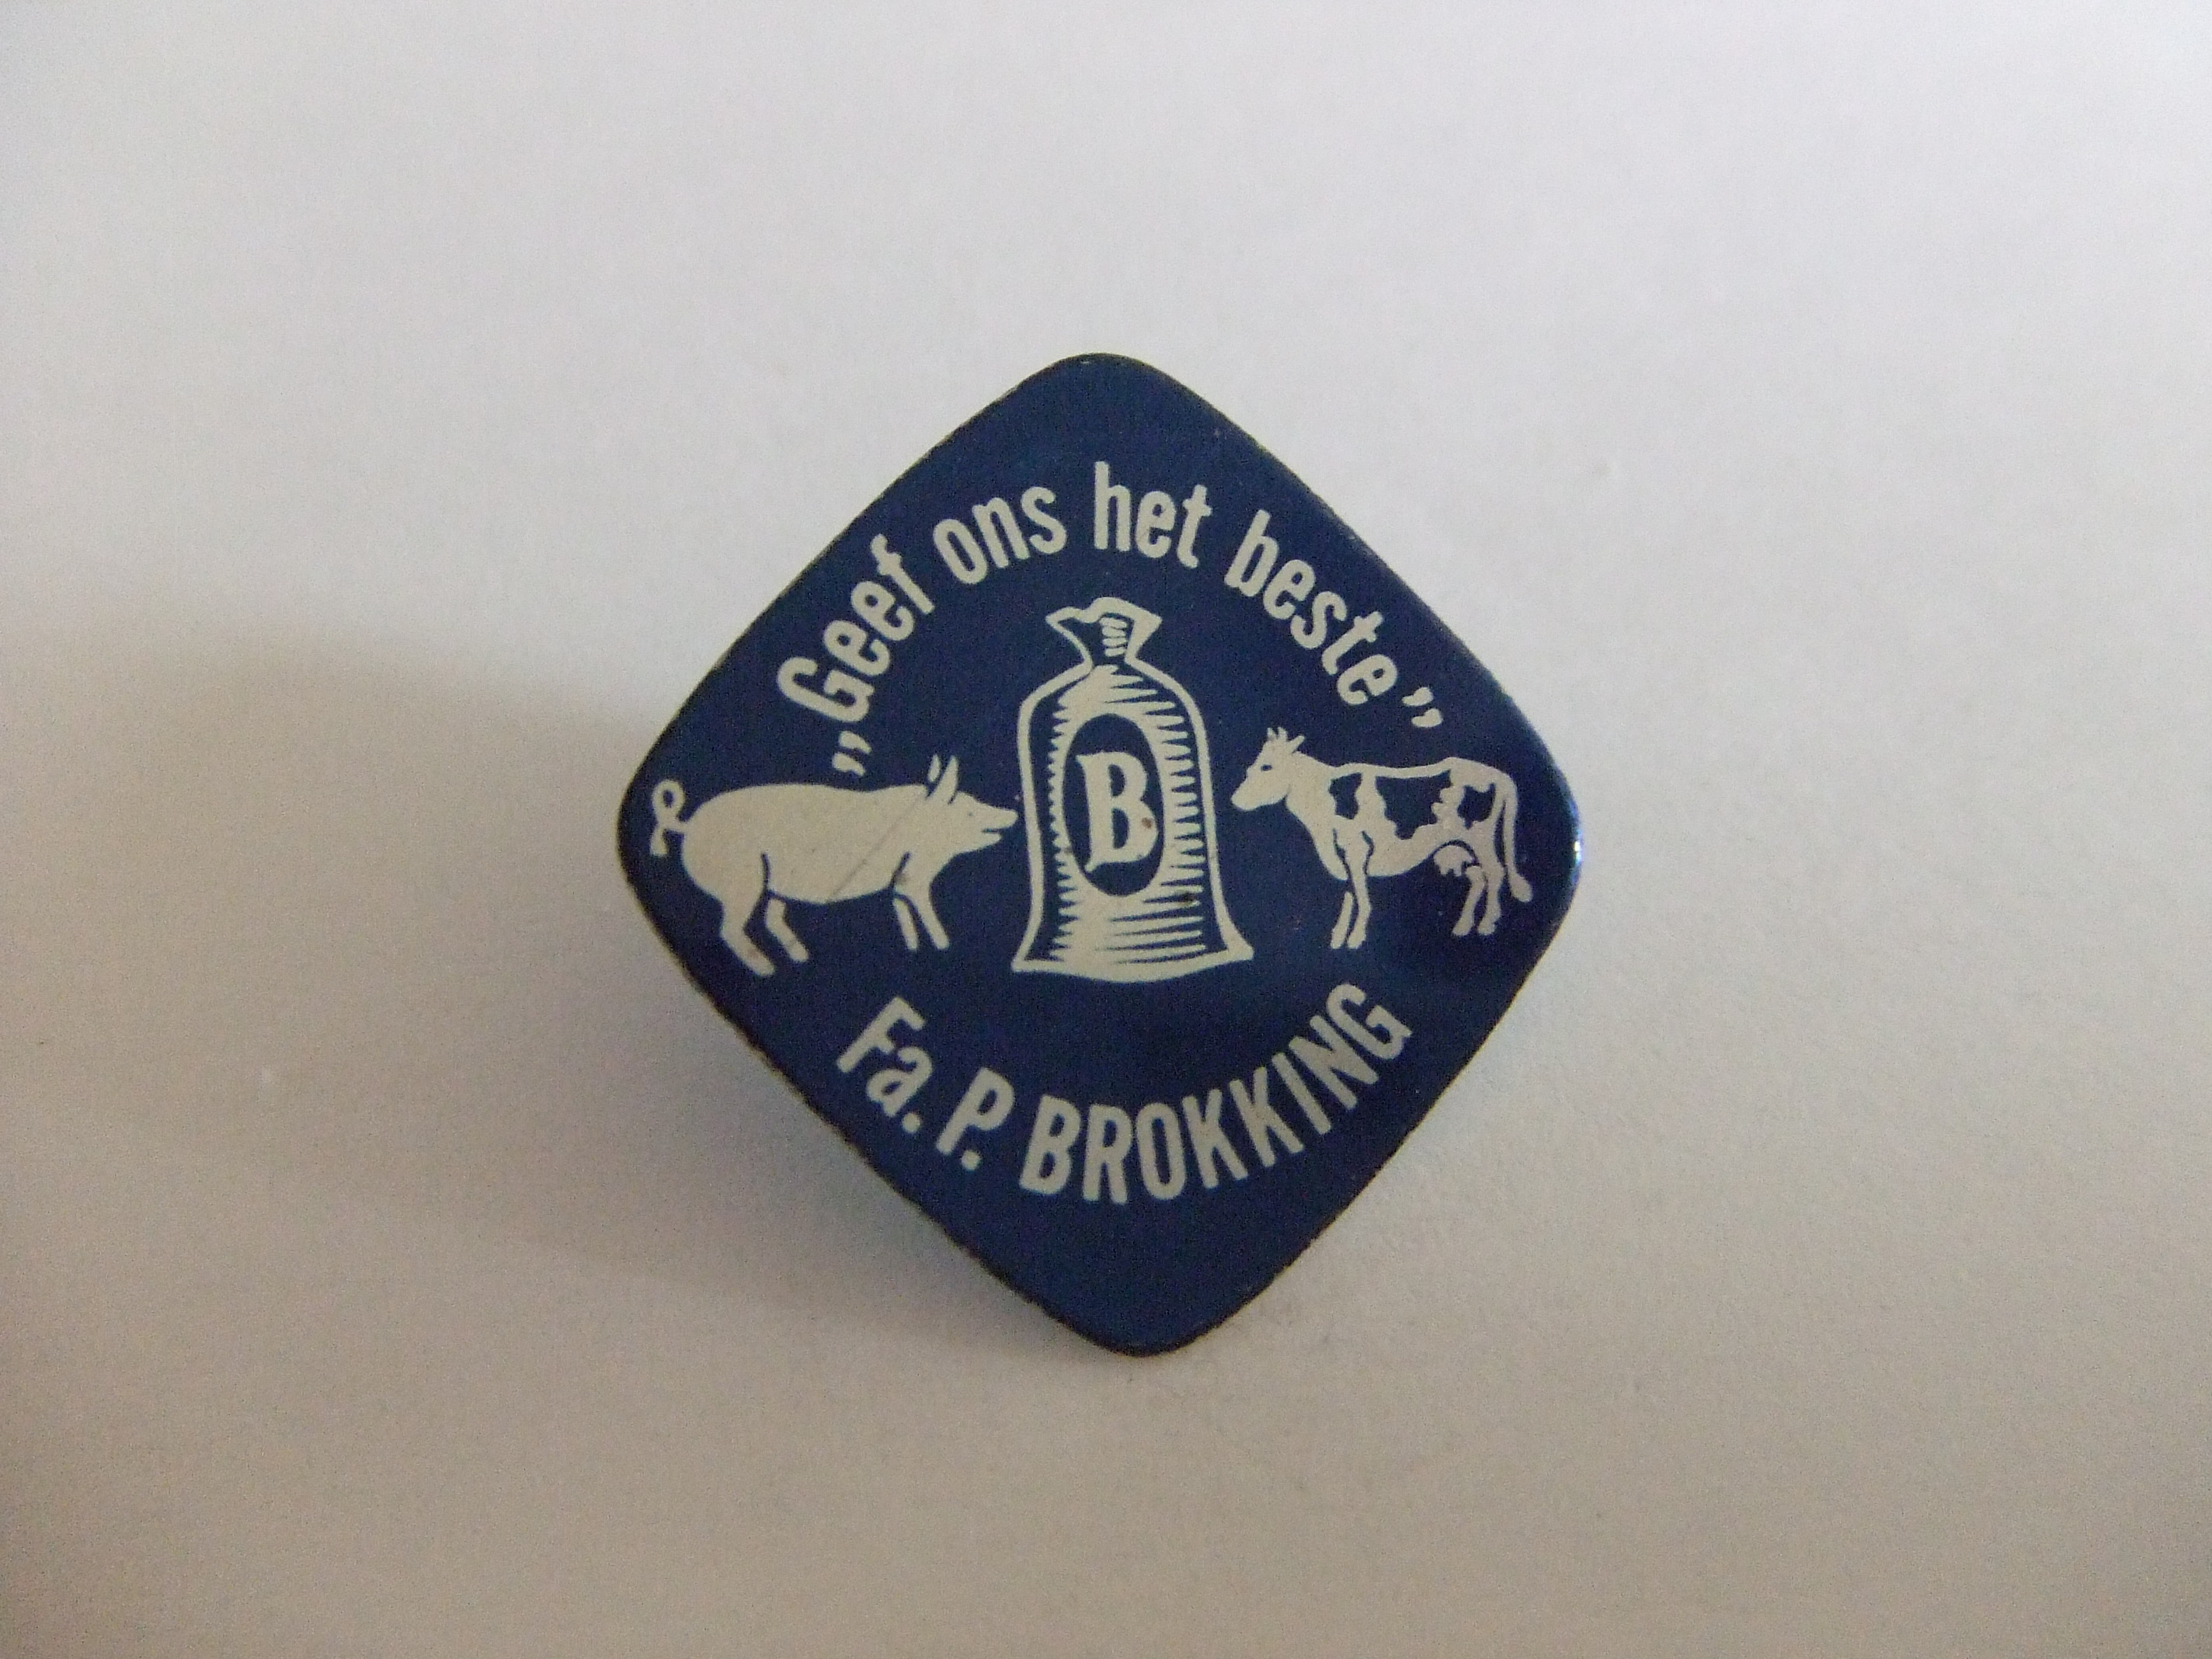 F.A. P. Brokking Nederlandse mengvoederfabrikanten.